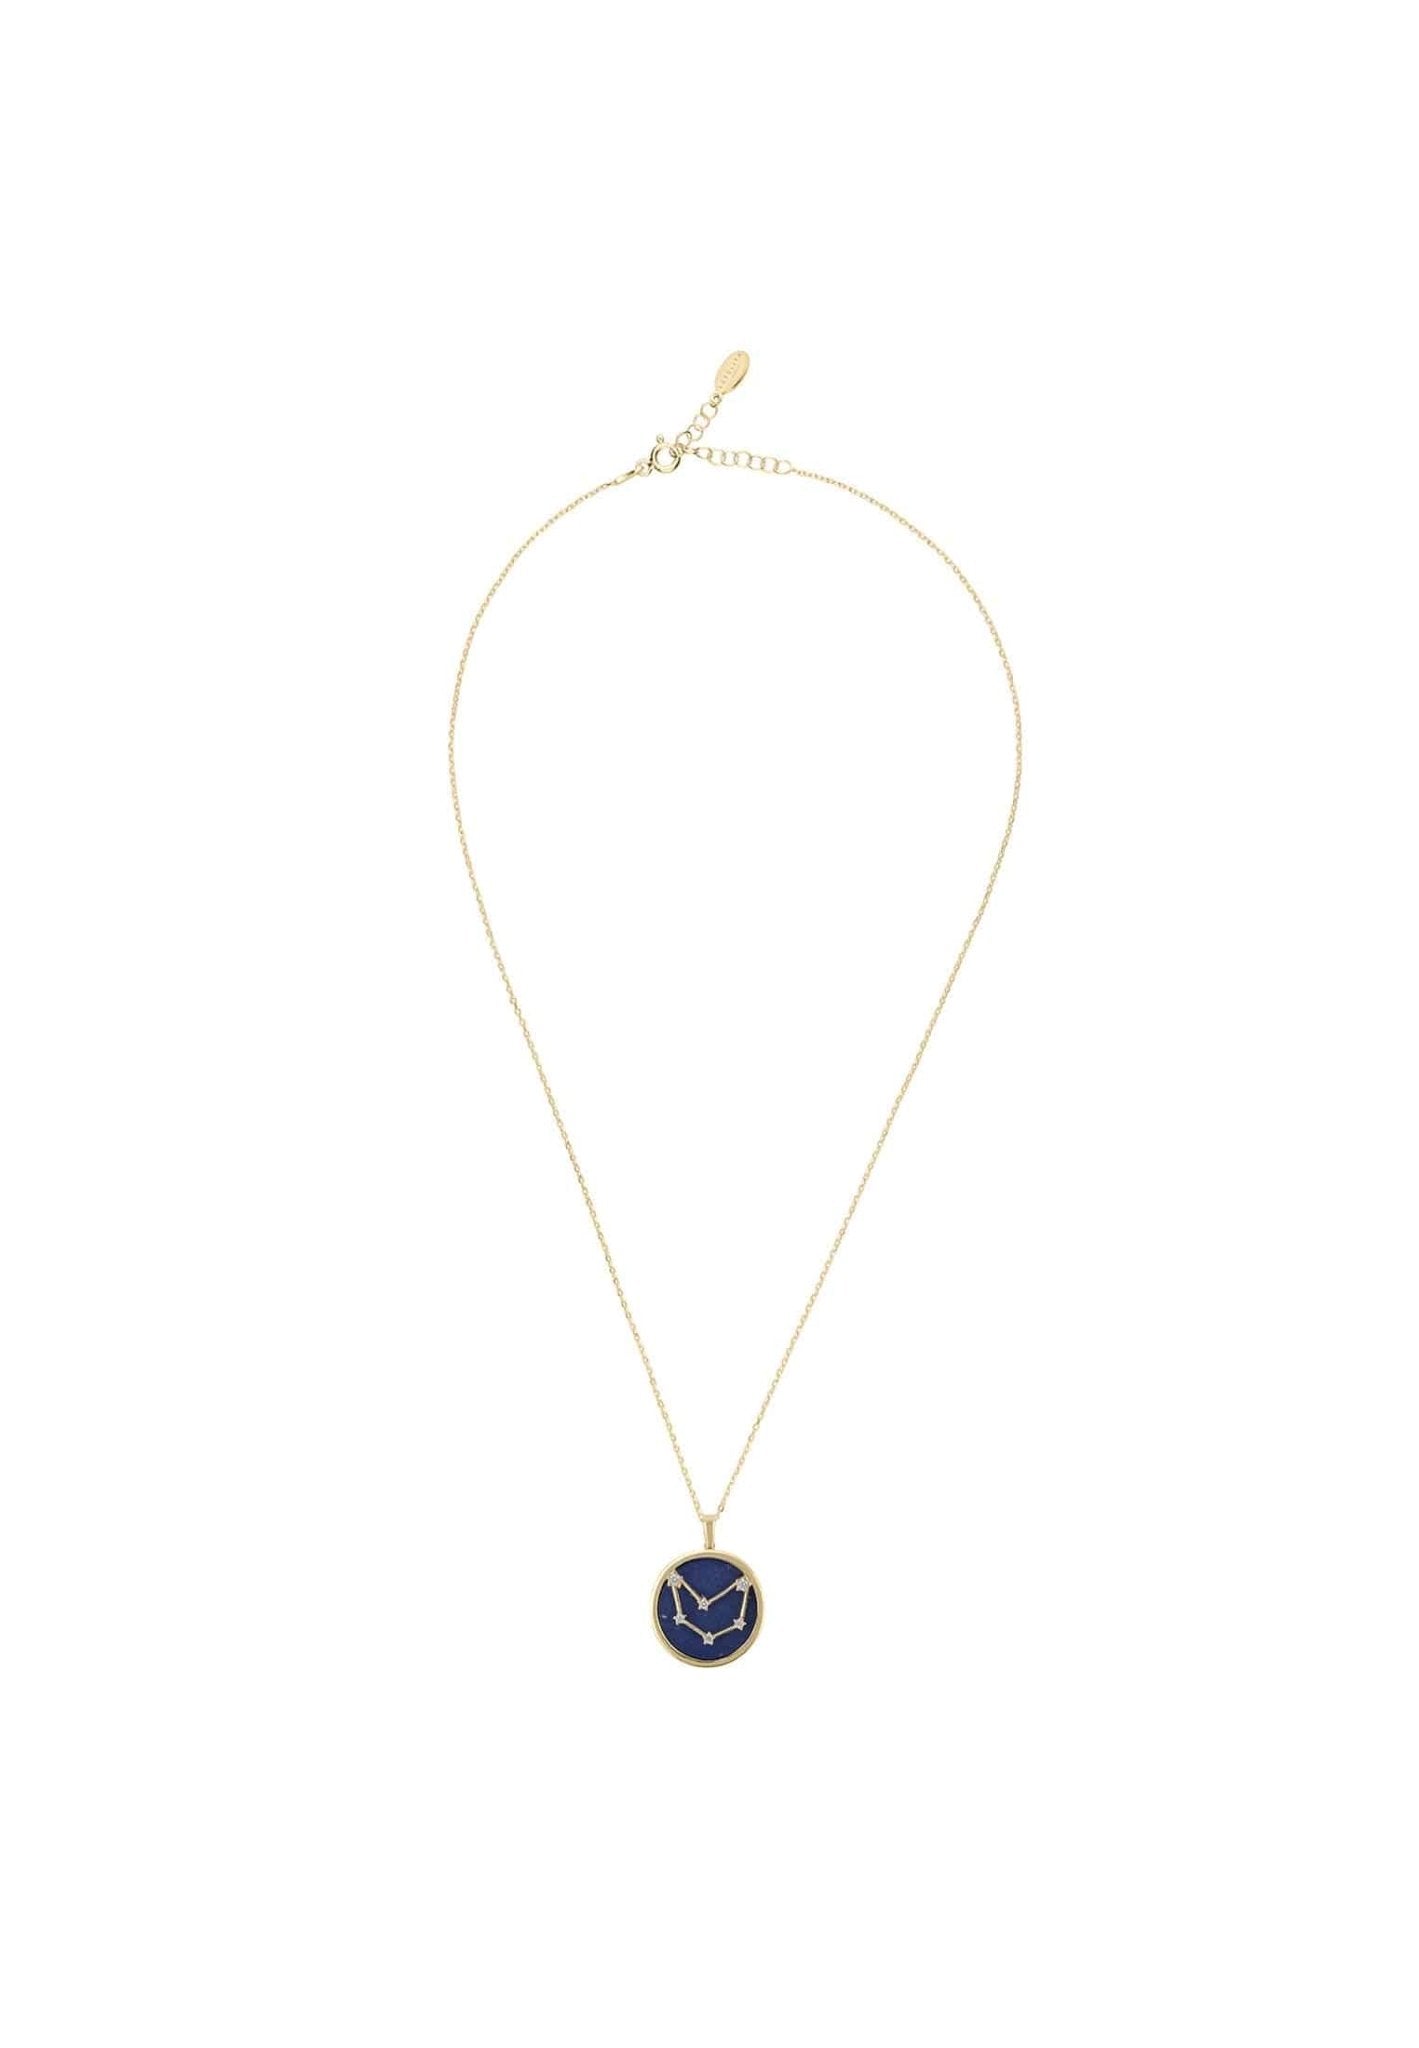 Zodiac Lapis Lazuli Gemstone Star Constellation Pendant Necklace Gold Capricorn - LATELITA Necklaces